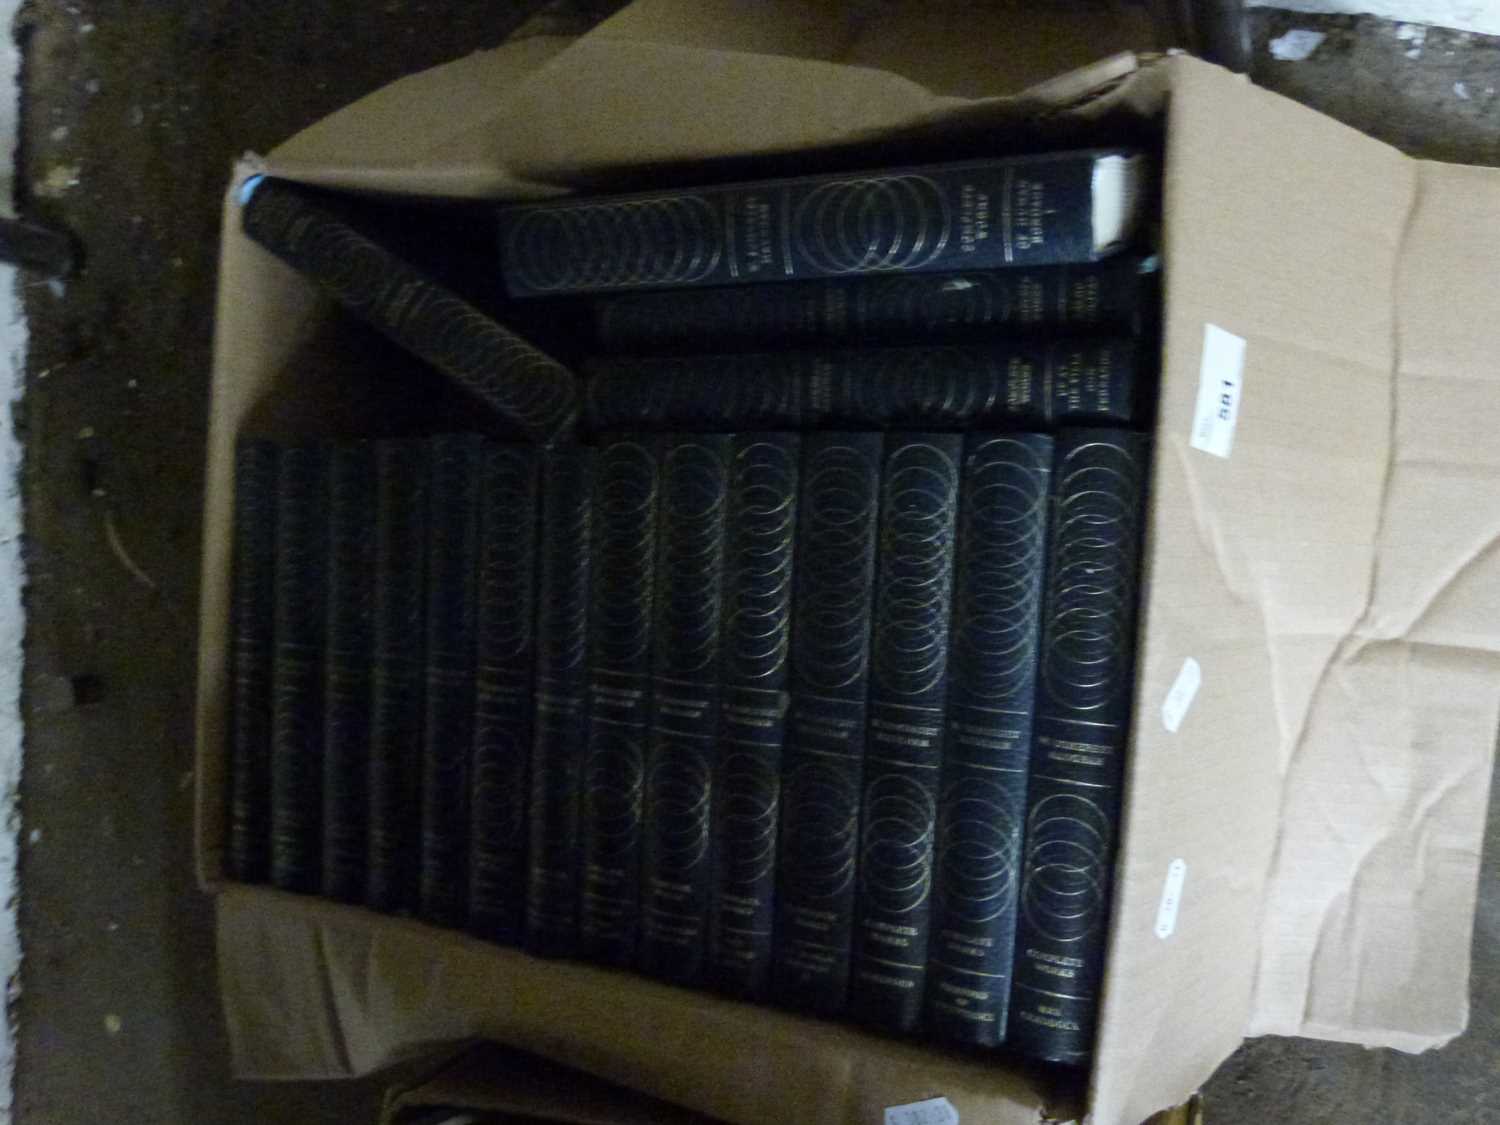 One box Heron books